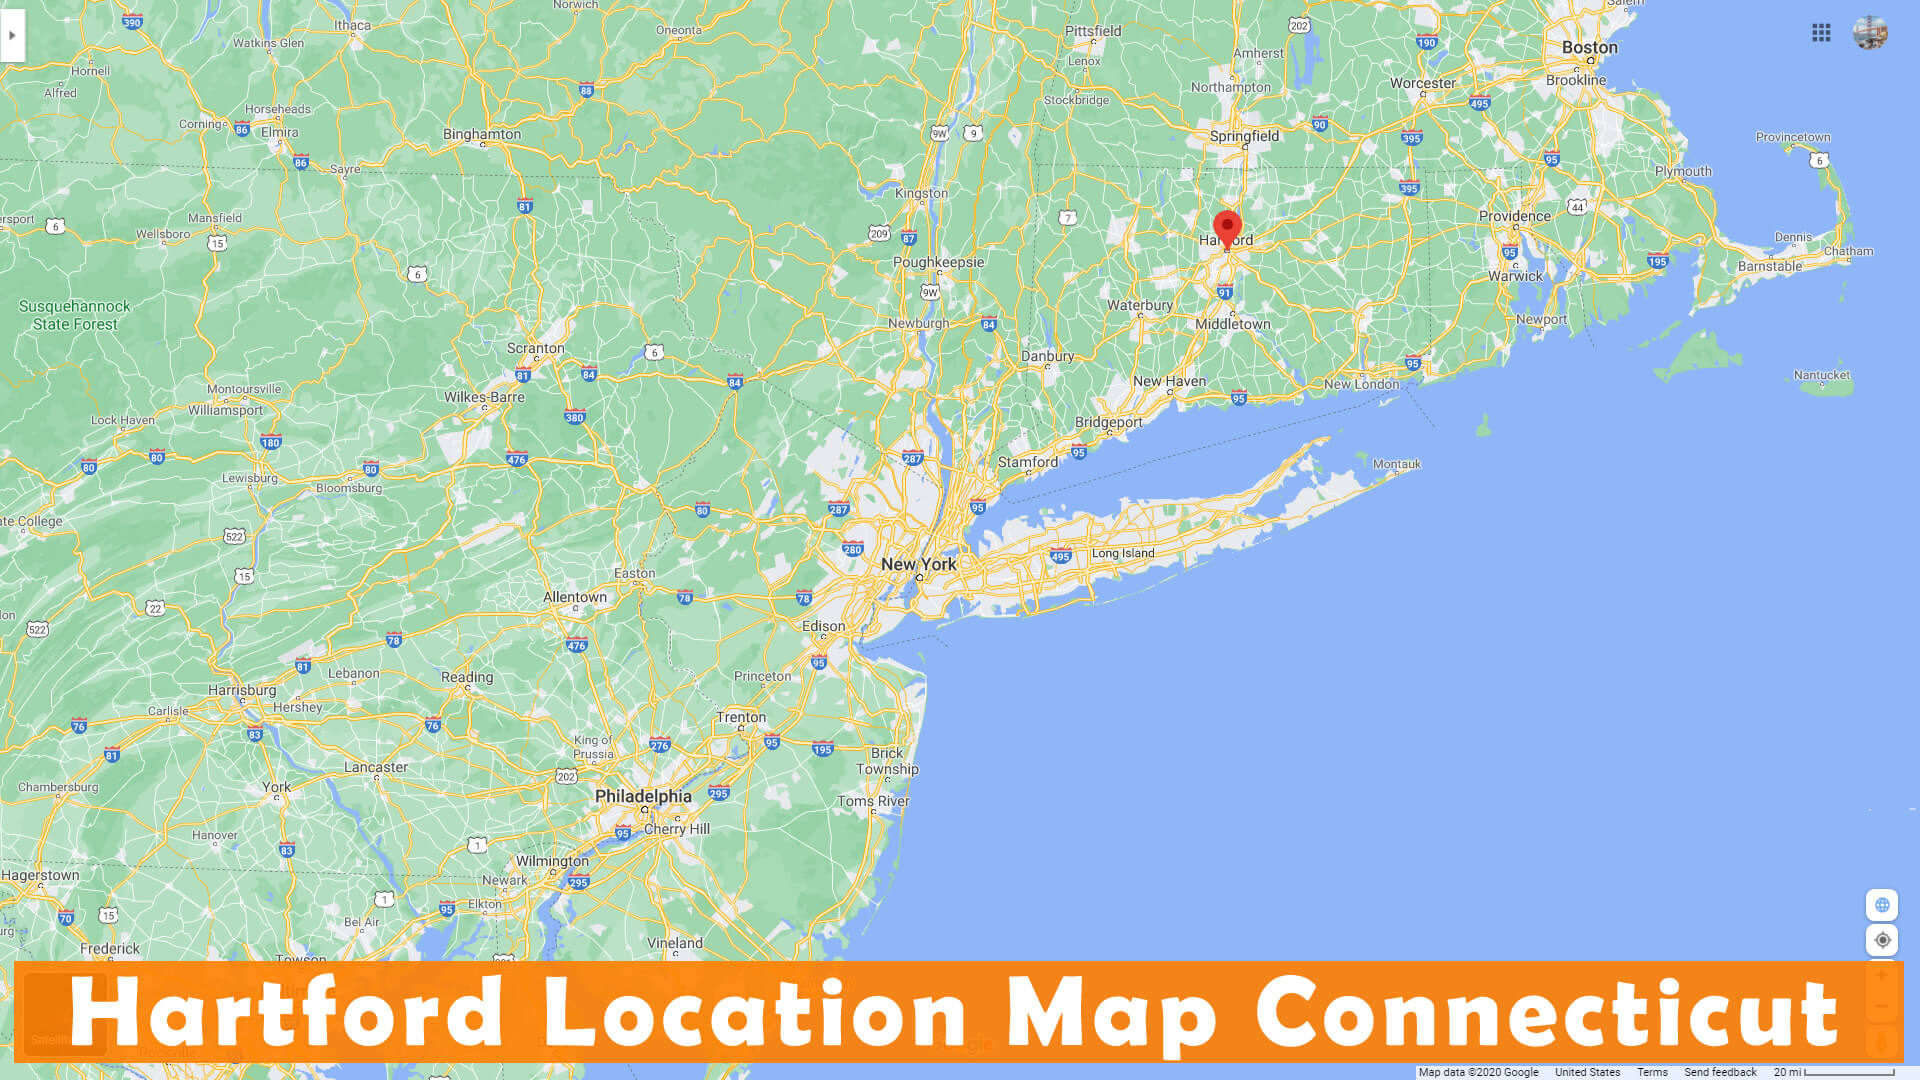 Hartford Location Map Connecticut